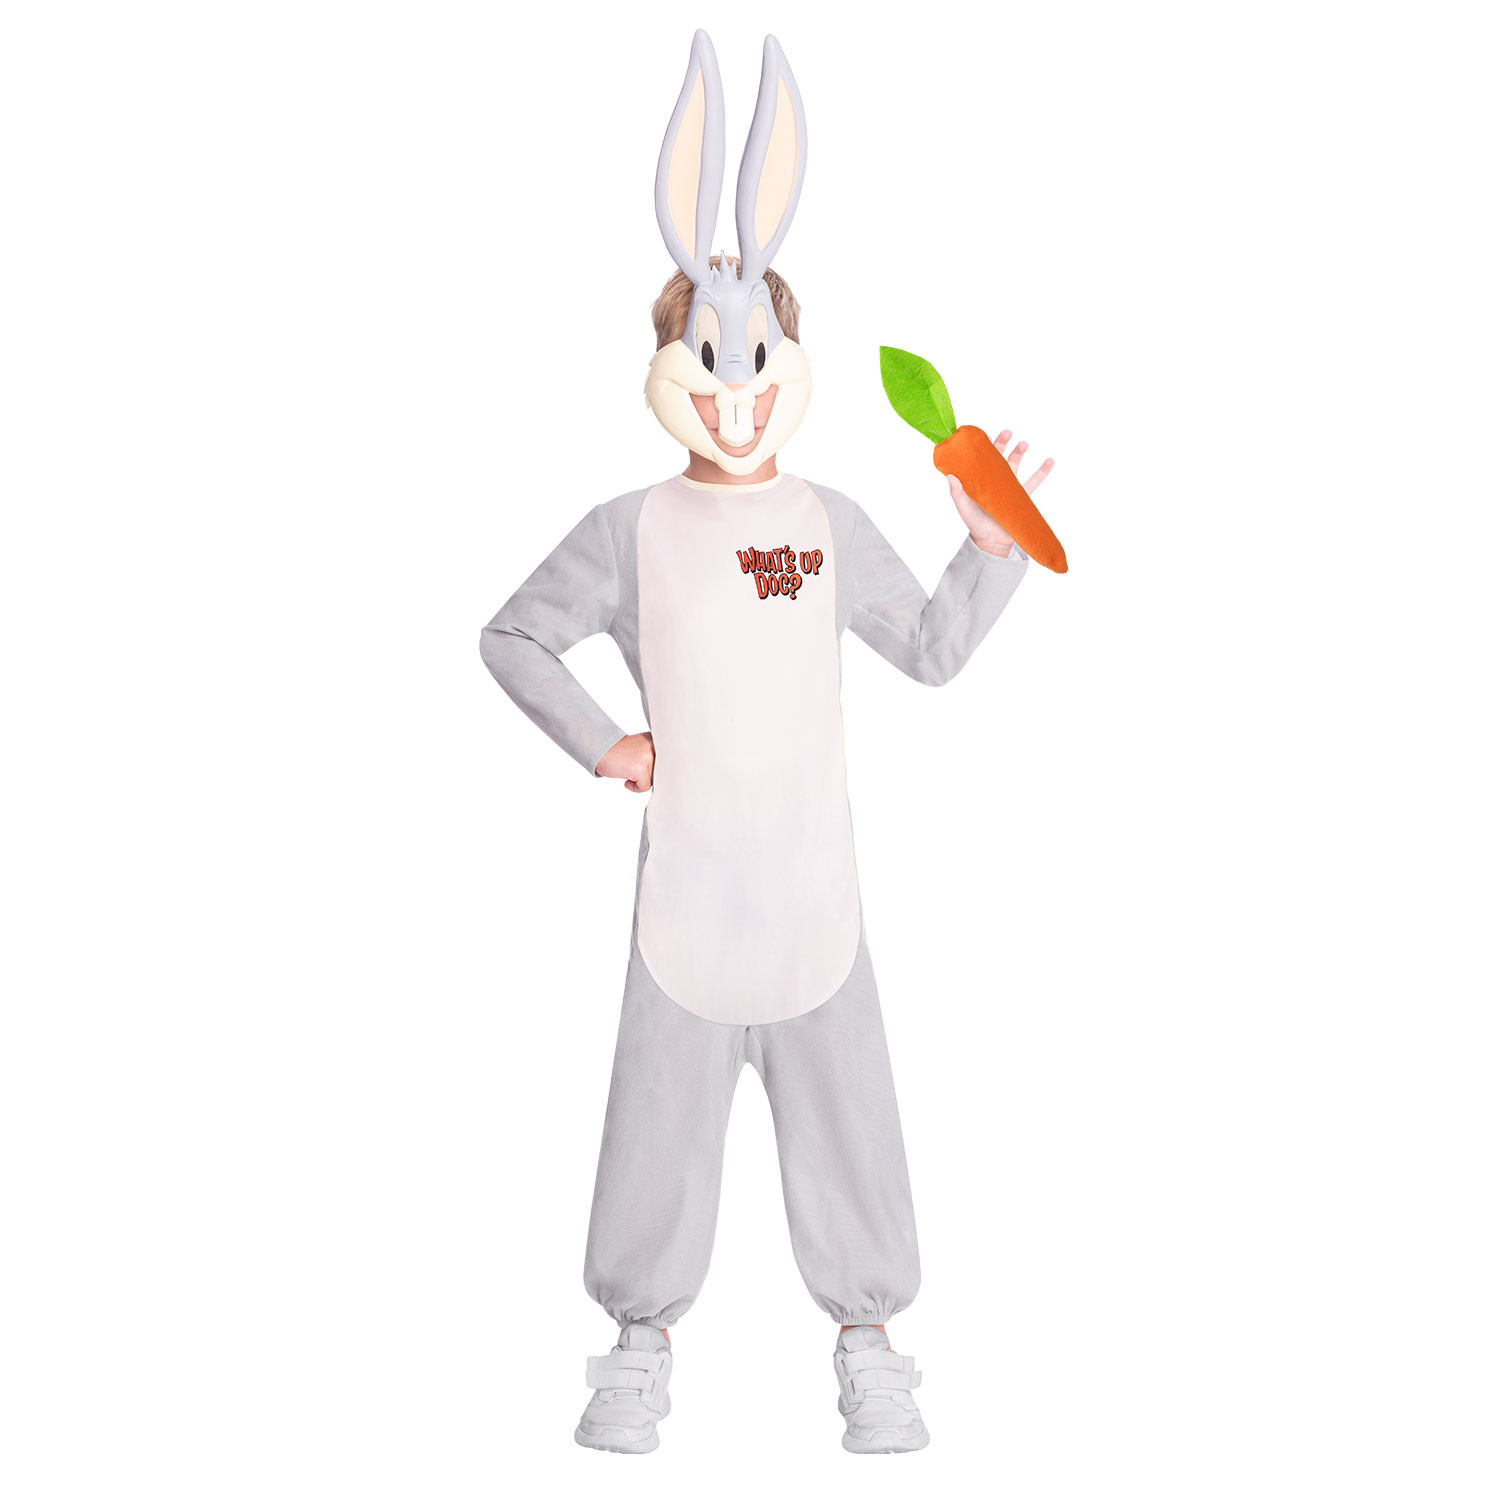 Bugs Bunny Costume - Size 6-8 Years - 1 PC : Amscan International